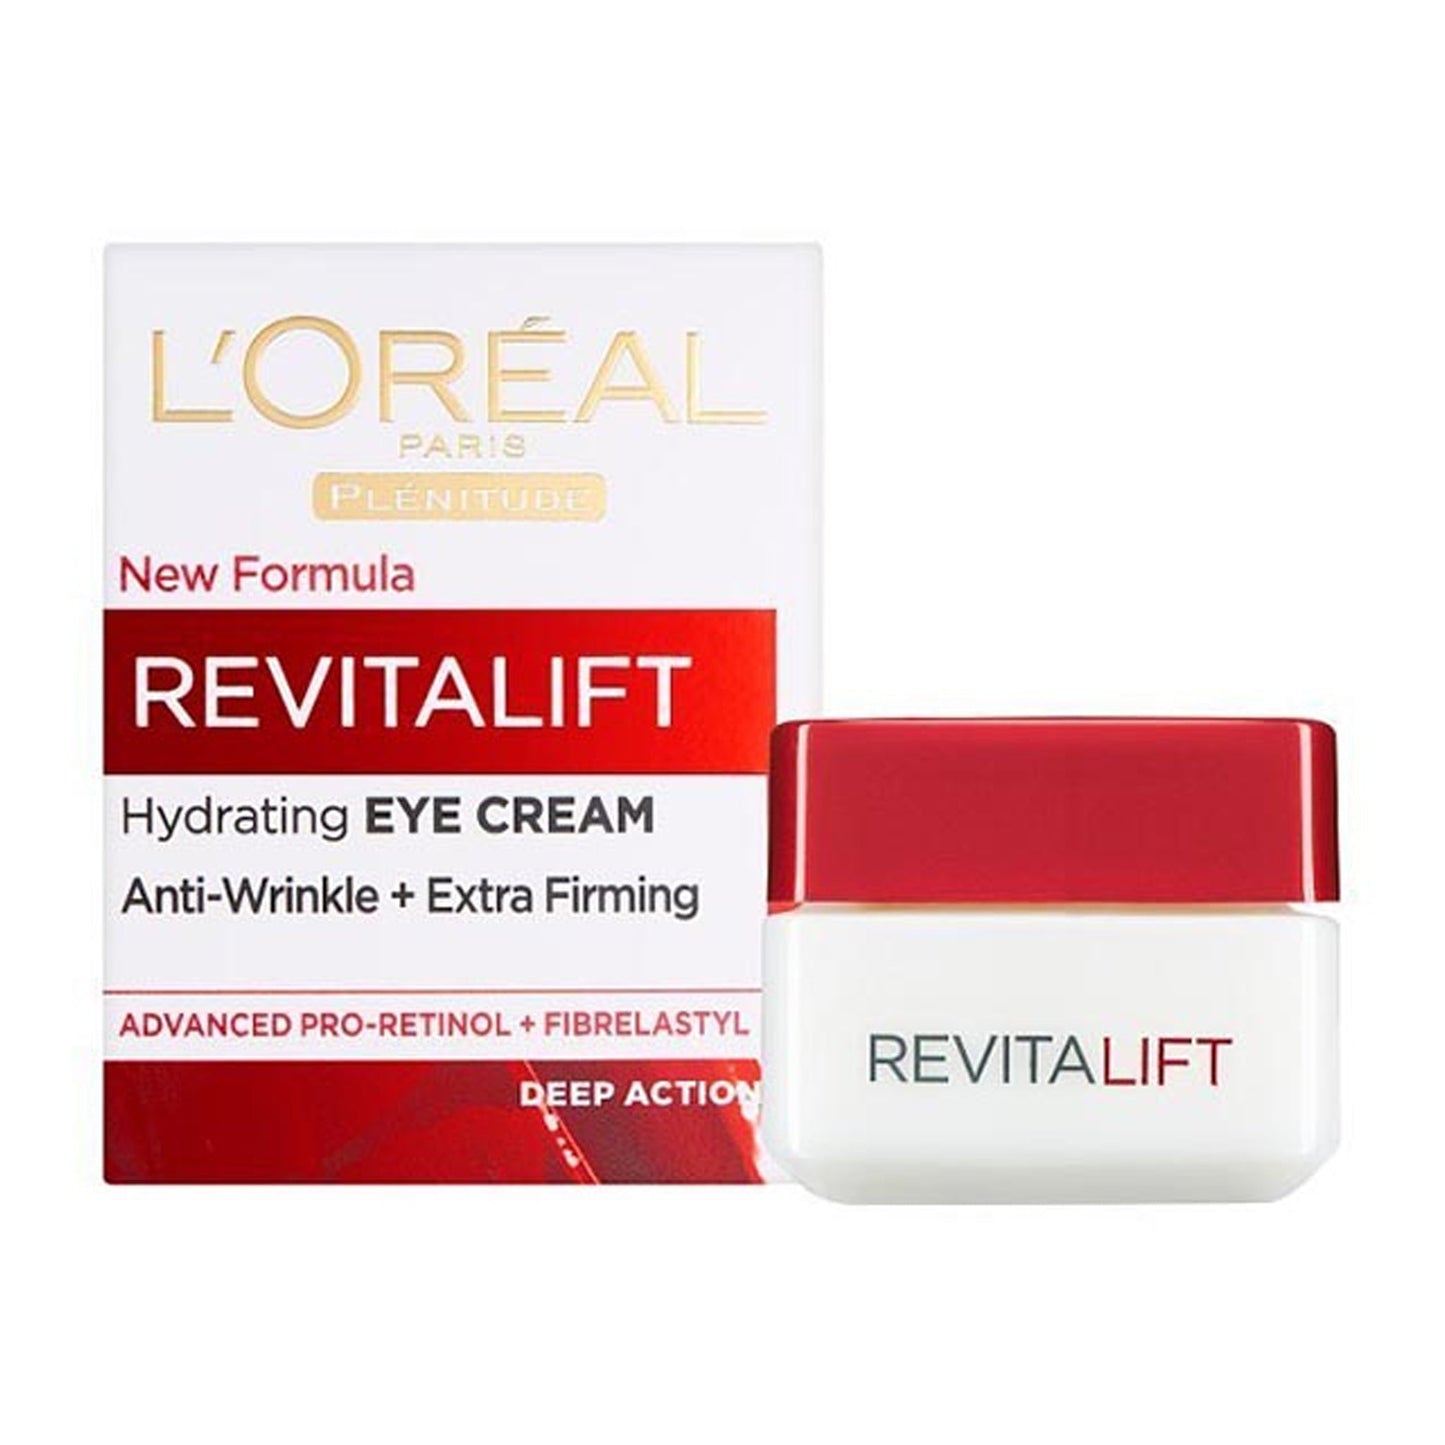 L'Oreal Paris - Revitalift Hydrating Eye Cream - 15ml